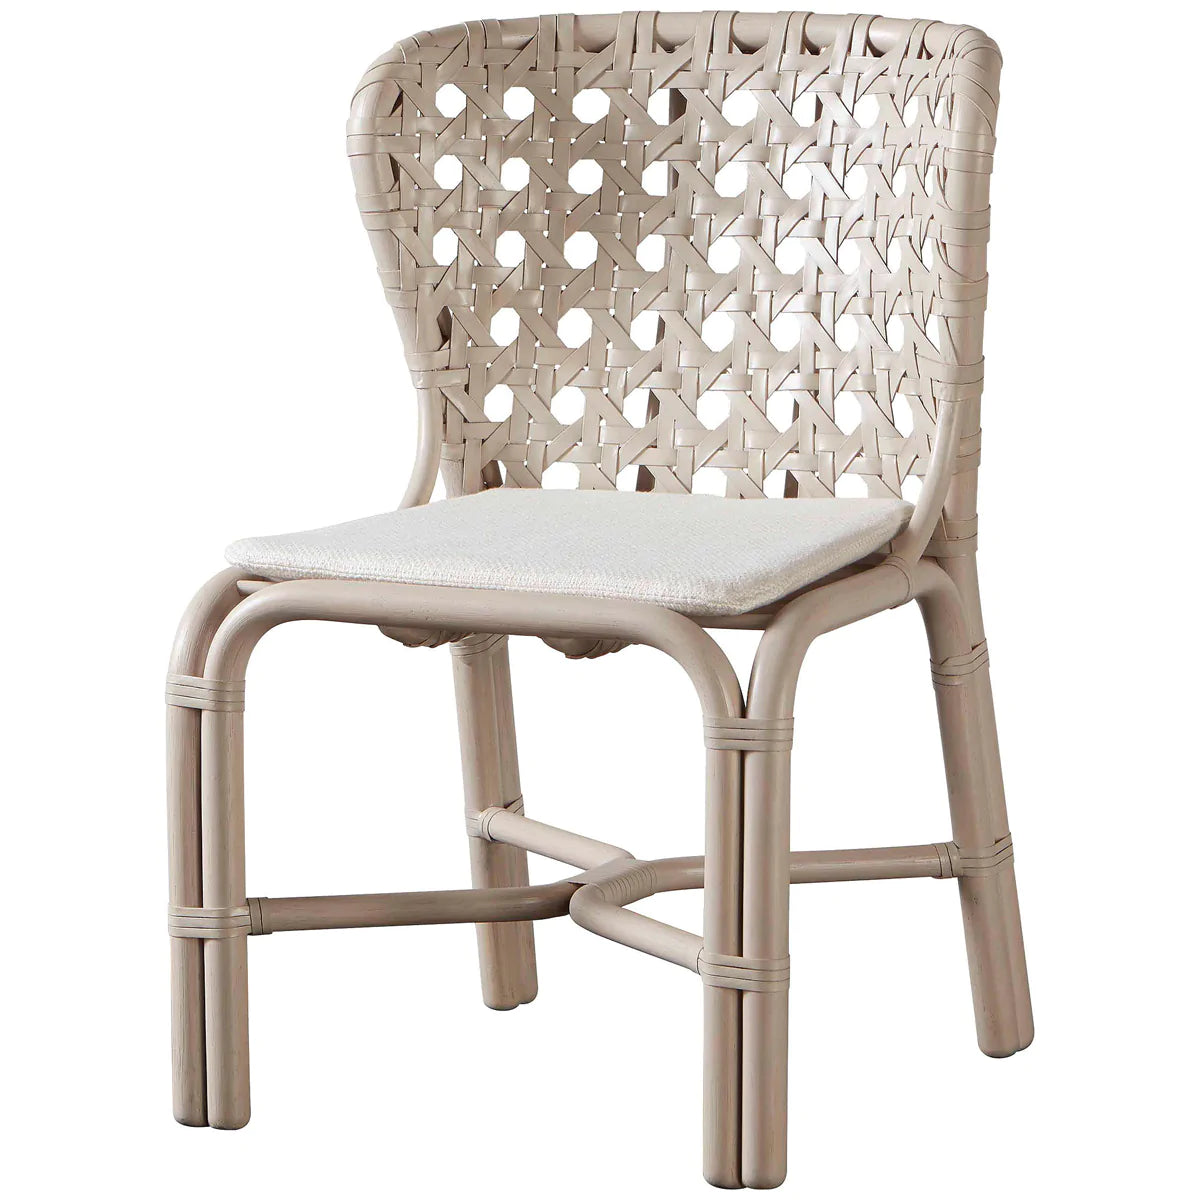 Baker Furniture Exalt Side Chair MCM143, Naturale